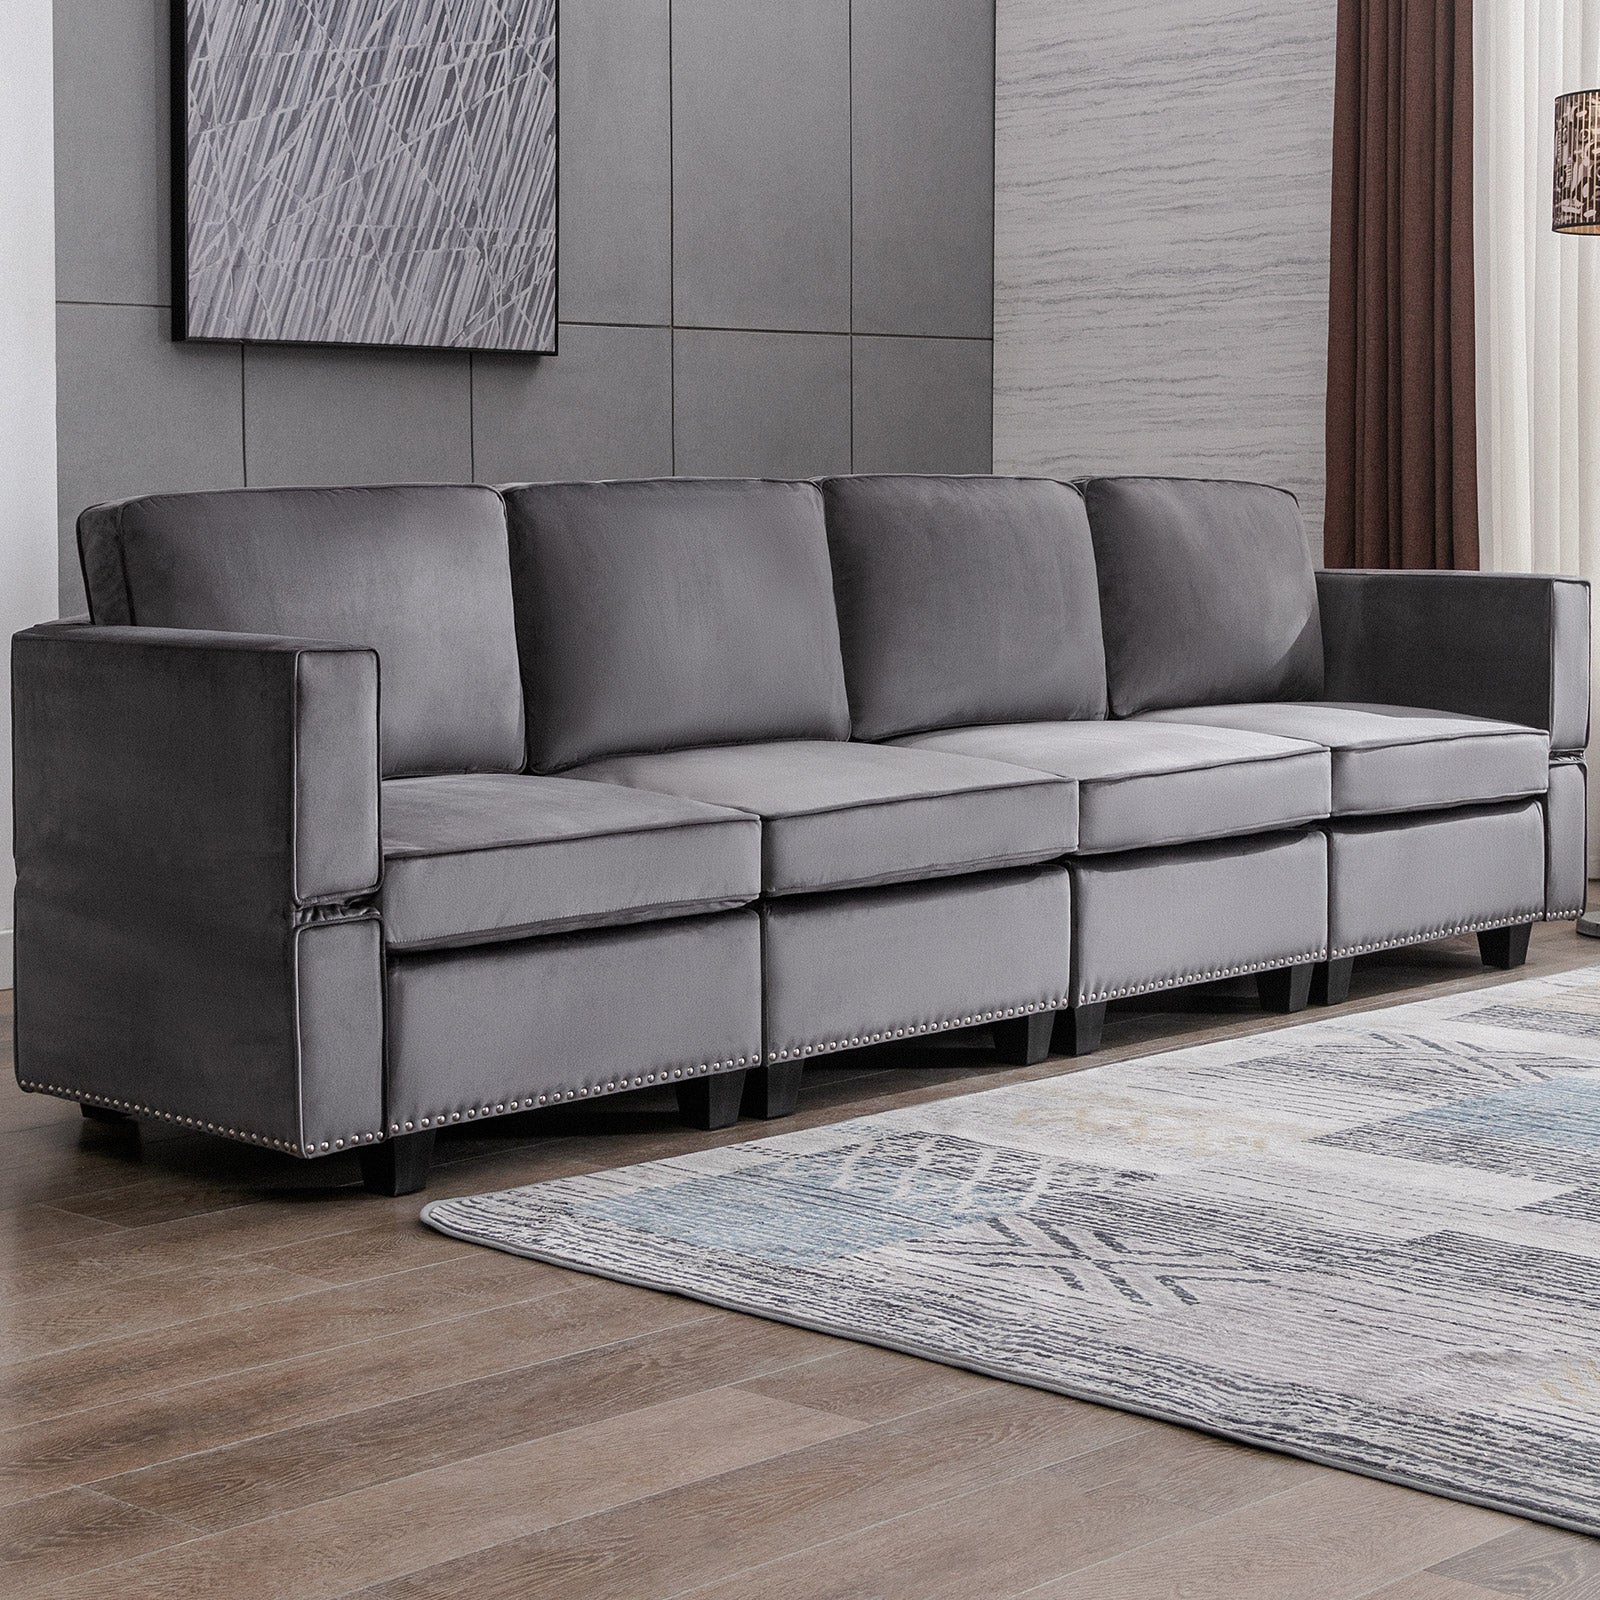 Cecer Velvet Upholstered Modular Sectional Sofa Set With Storage Ottoman